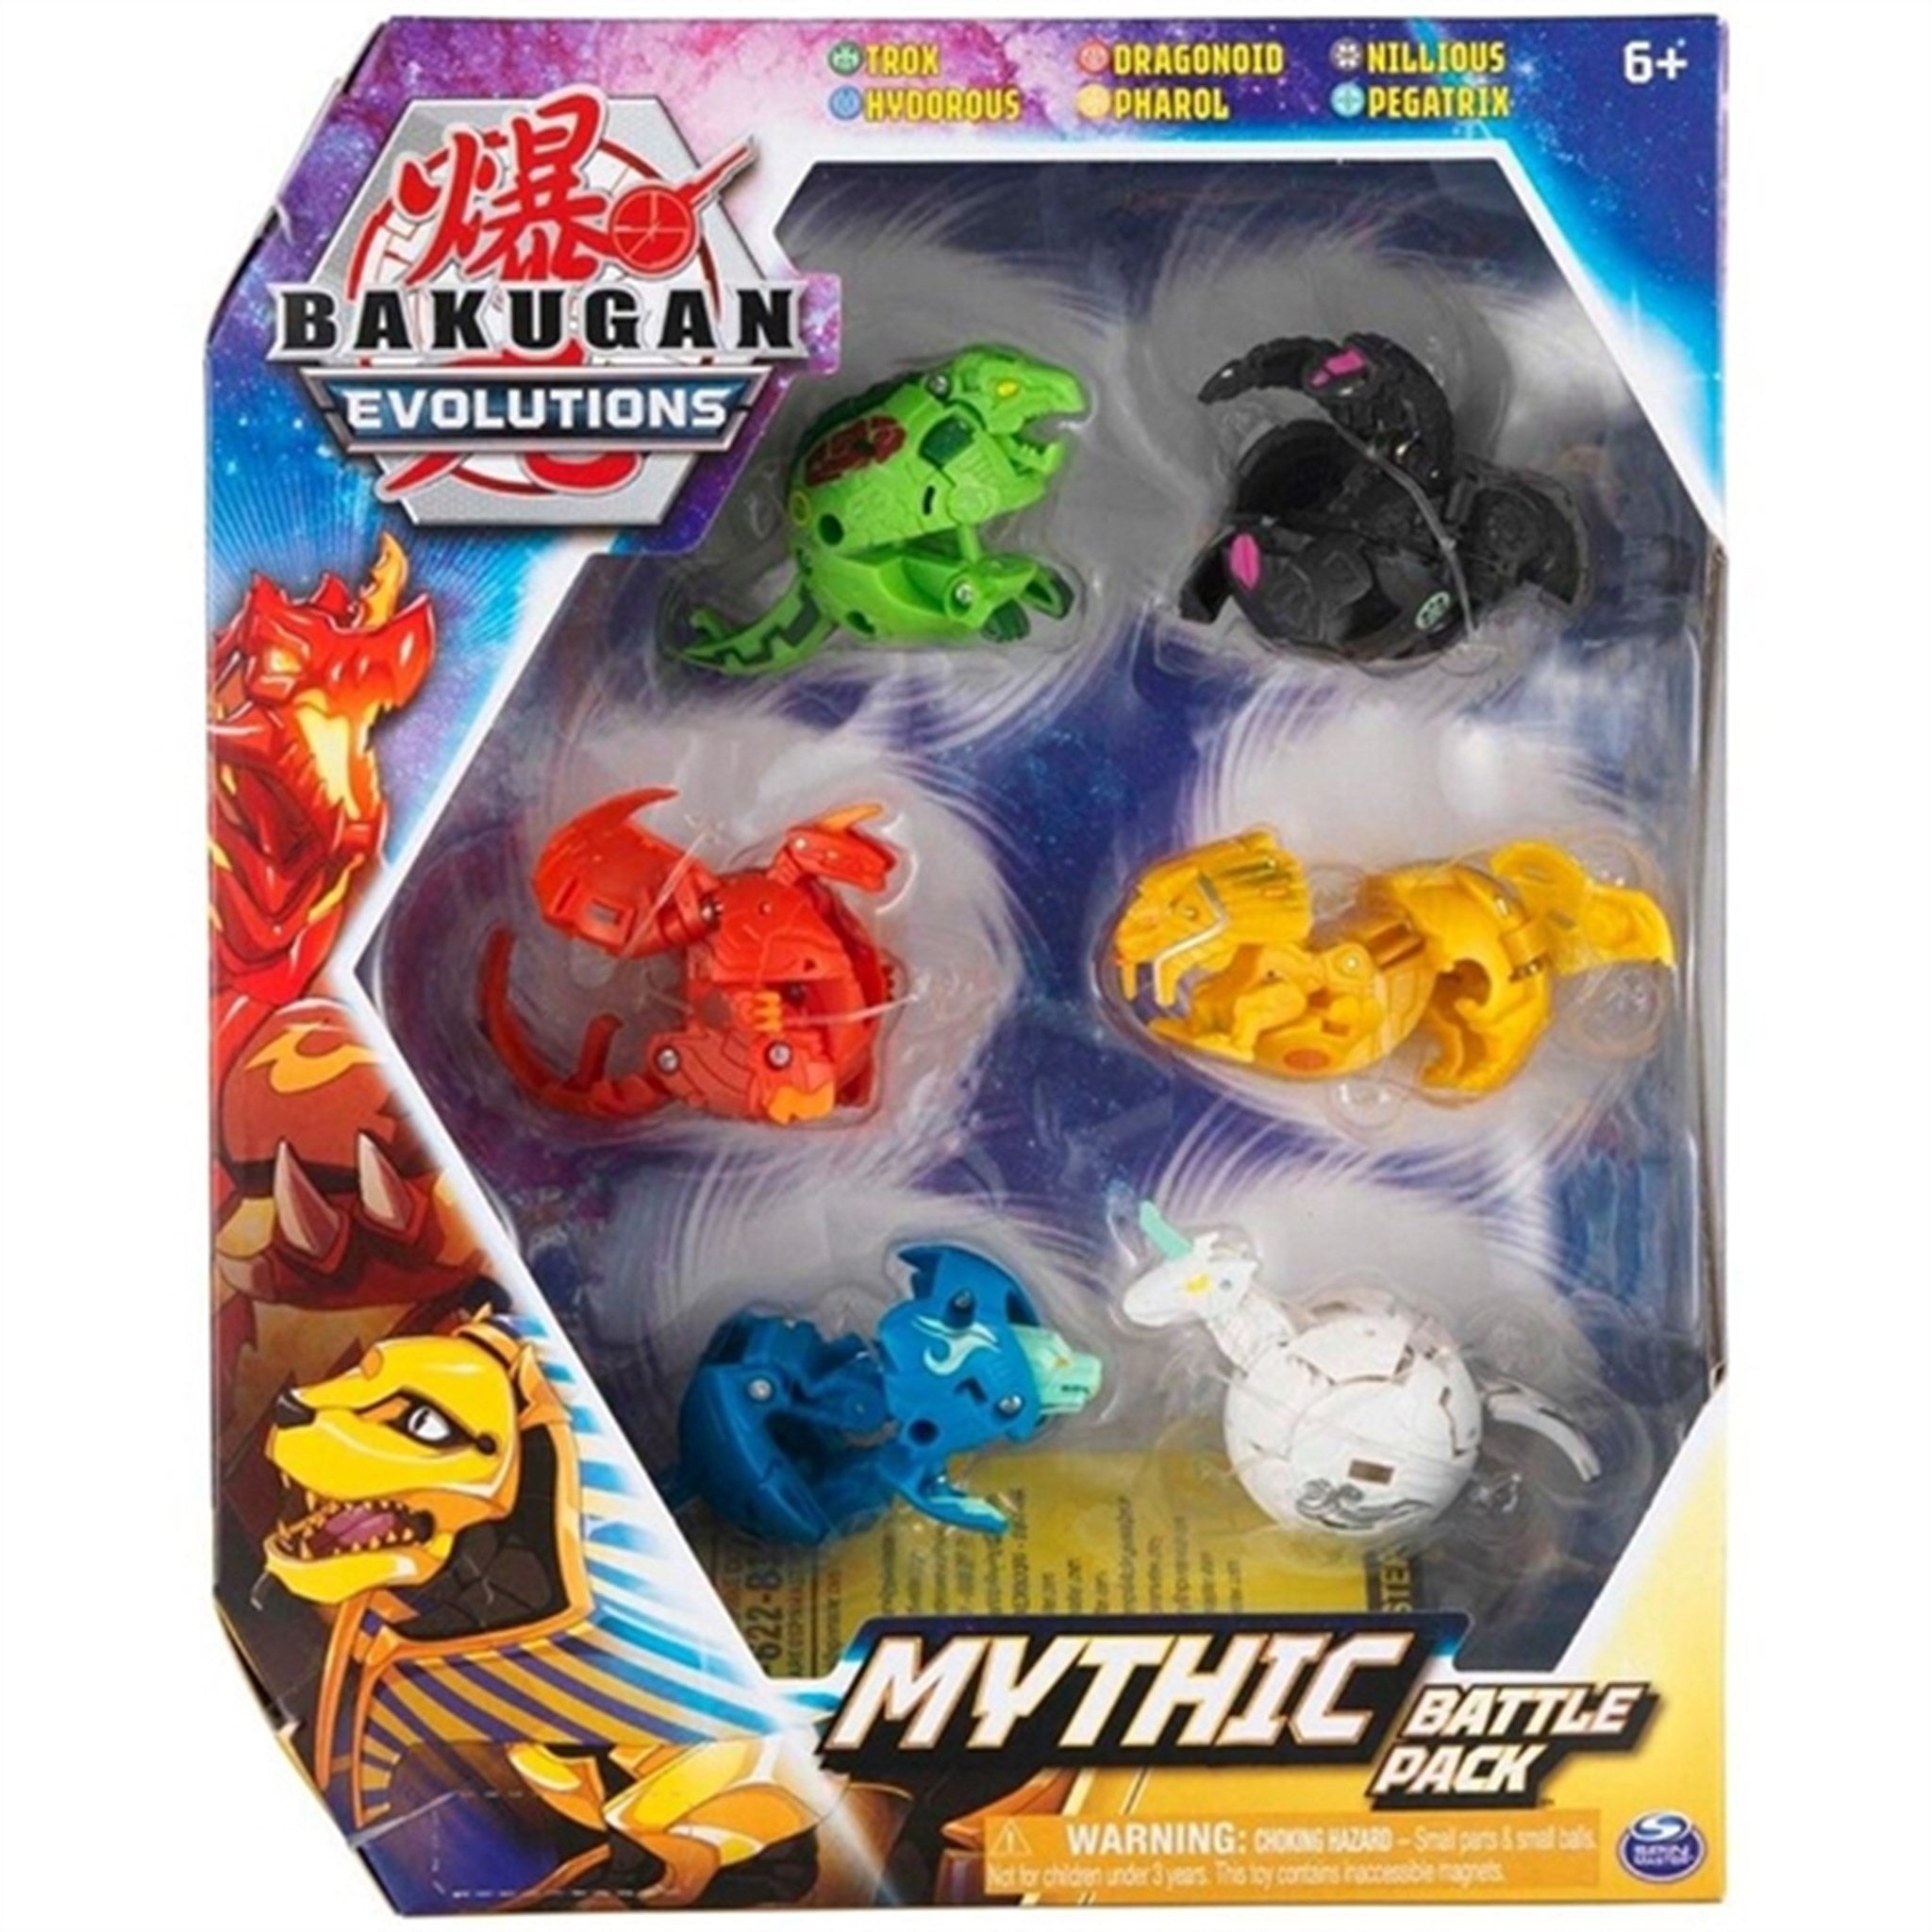 Bakugan S4 Mythic Battle Pack